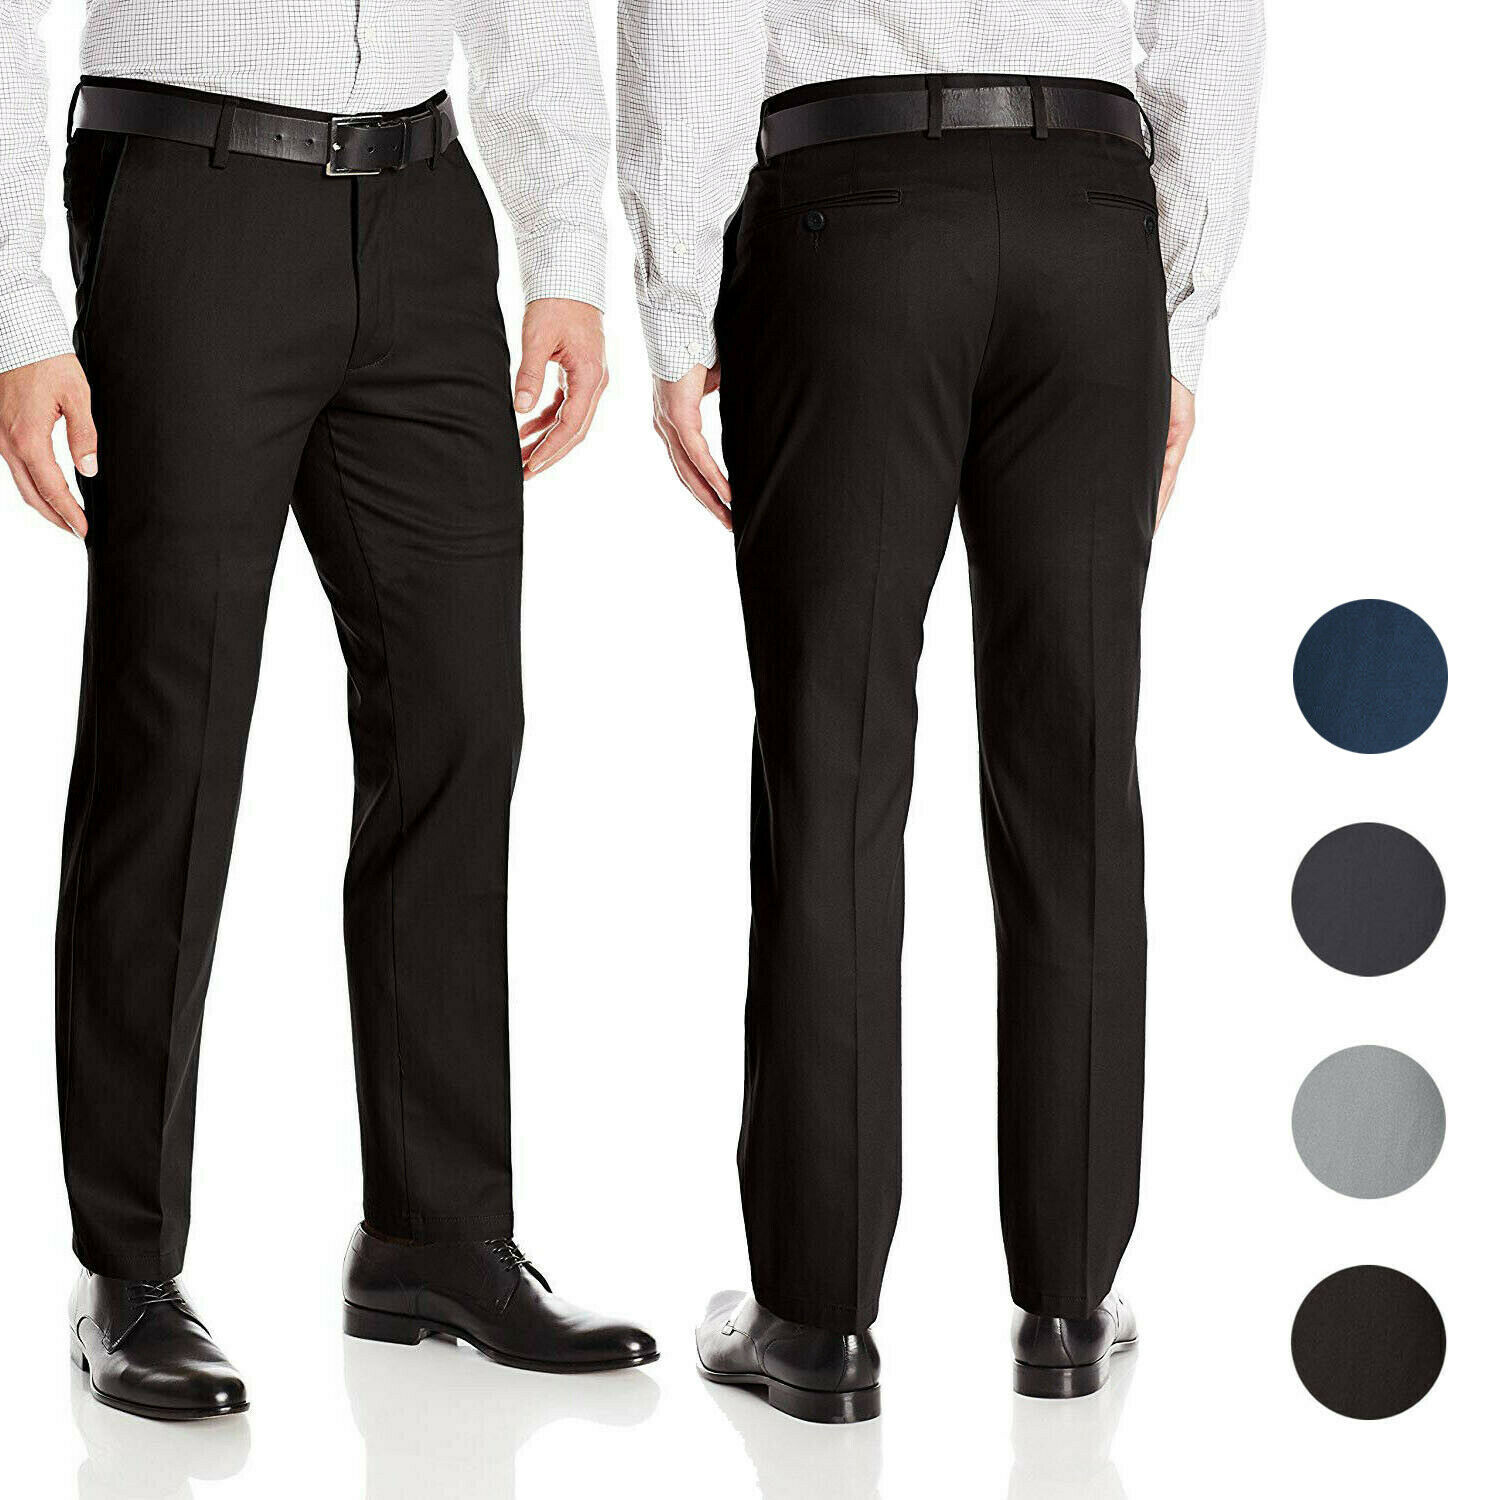 Primary image for Men's Formal Slim Fit Slacks Trousers Flat Front Business Dress Pants